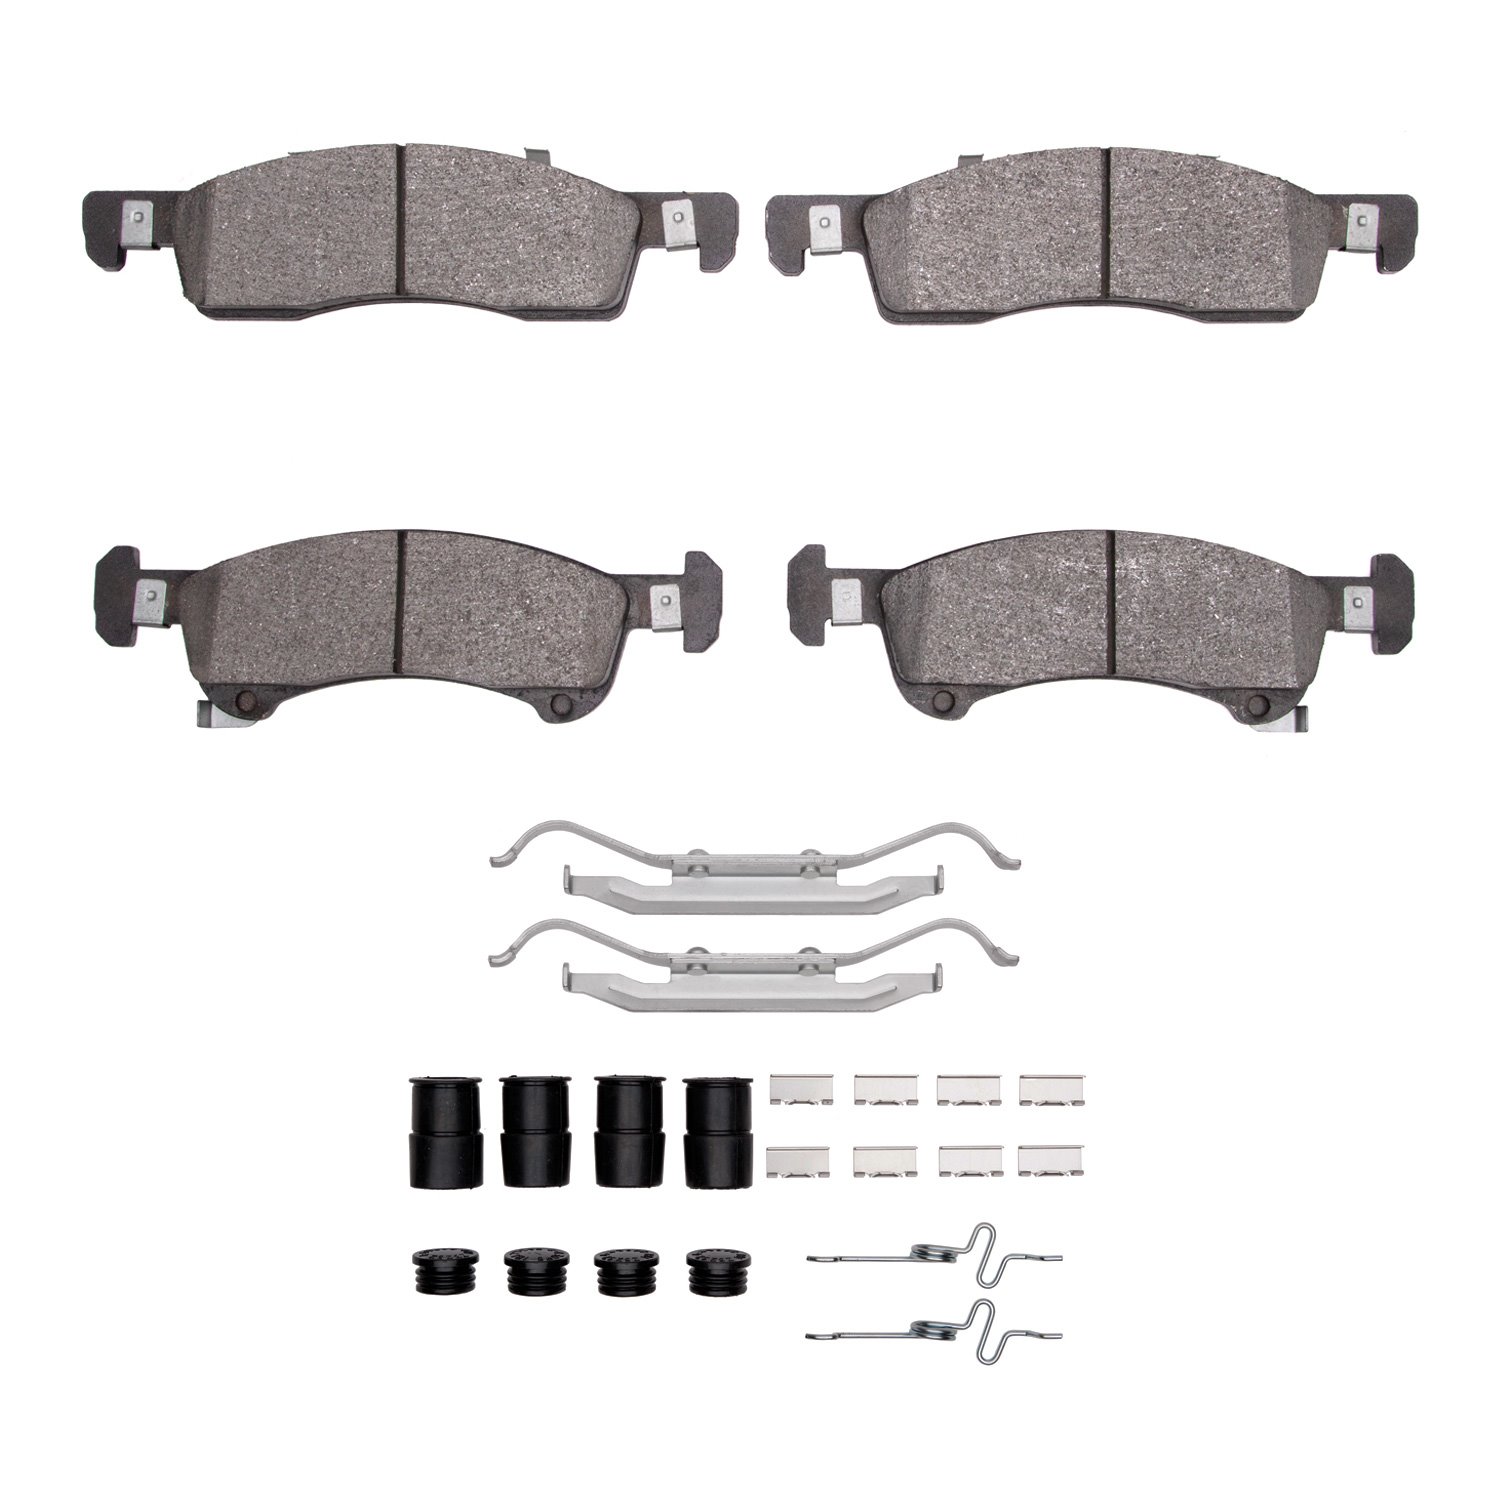 1310-0934-01 3000-Series Ceramic Brake Pads & Hardware Kit, 2002-2006 Ford/Lincoln/Mercury/Mazda, Position: Front